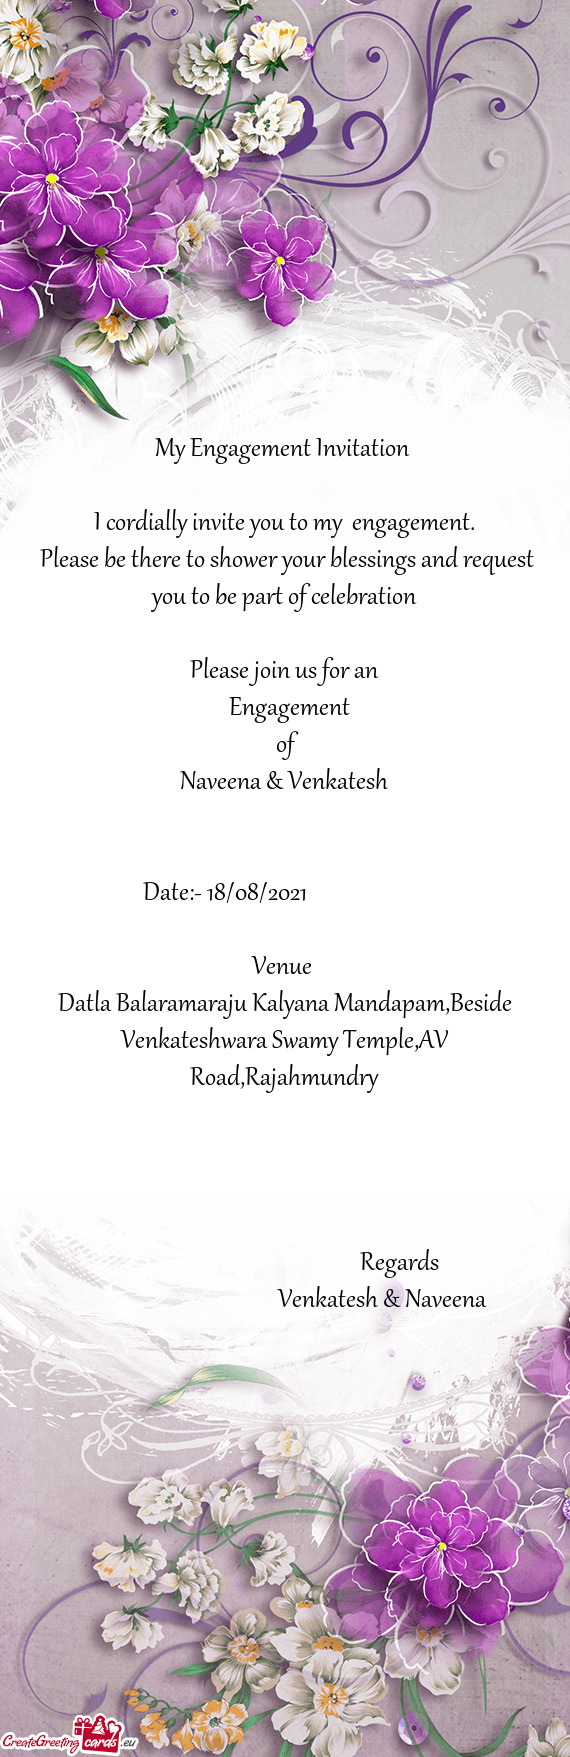 Datla Balaramaraju Kalyana Mandapam,Beside Venkateshwara Swamy Temple,AV Road,Rajahmundry